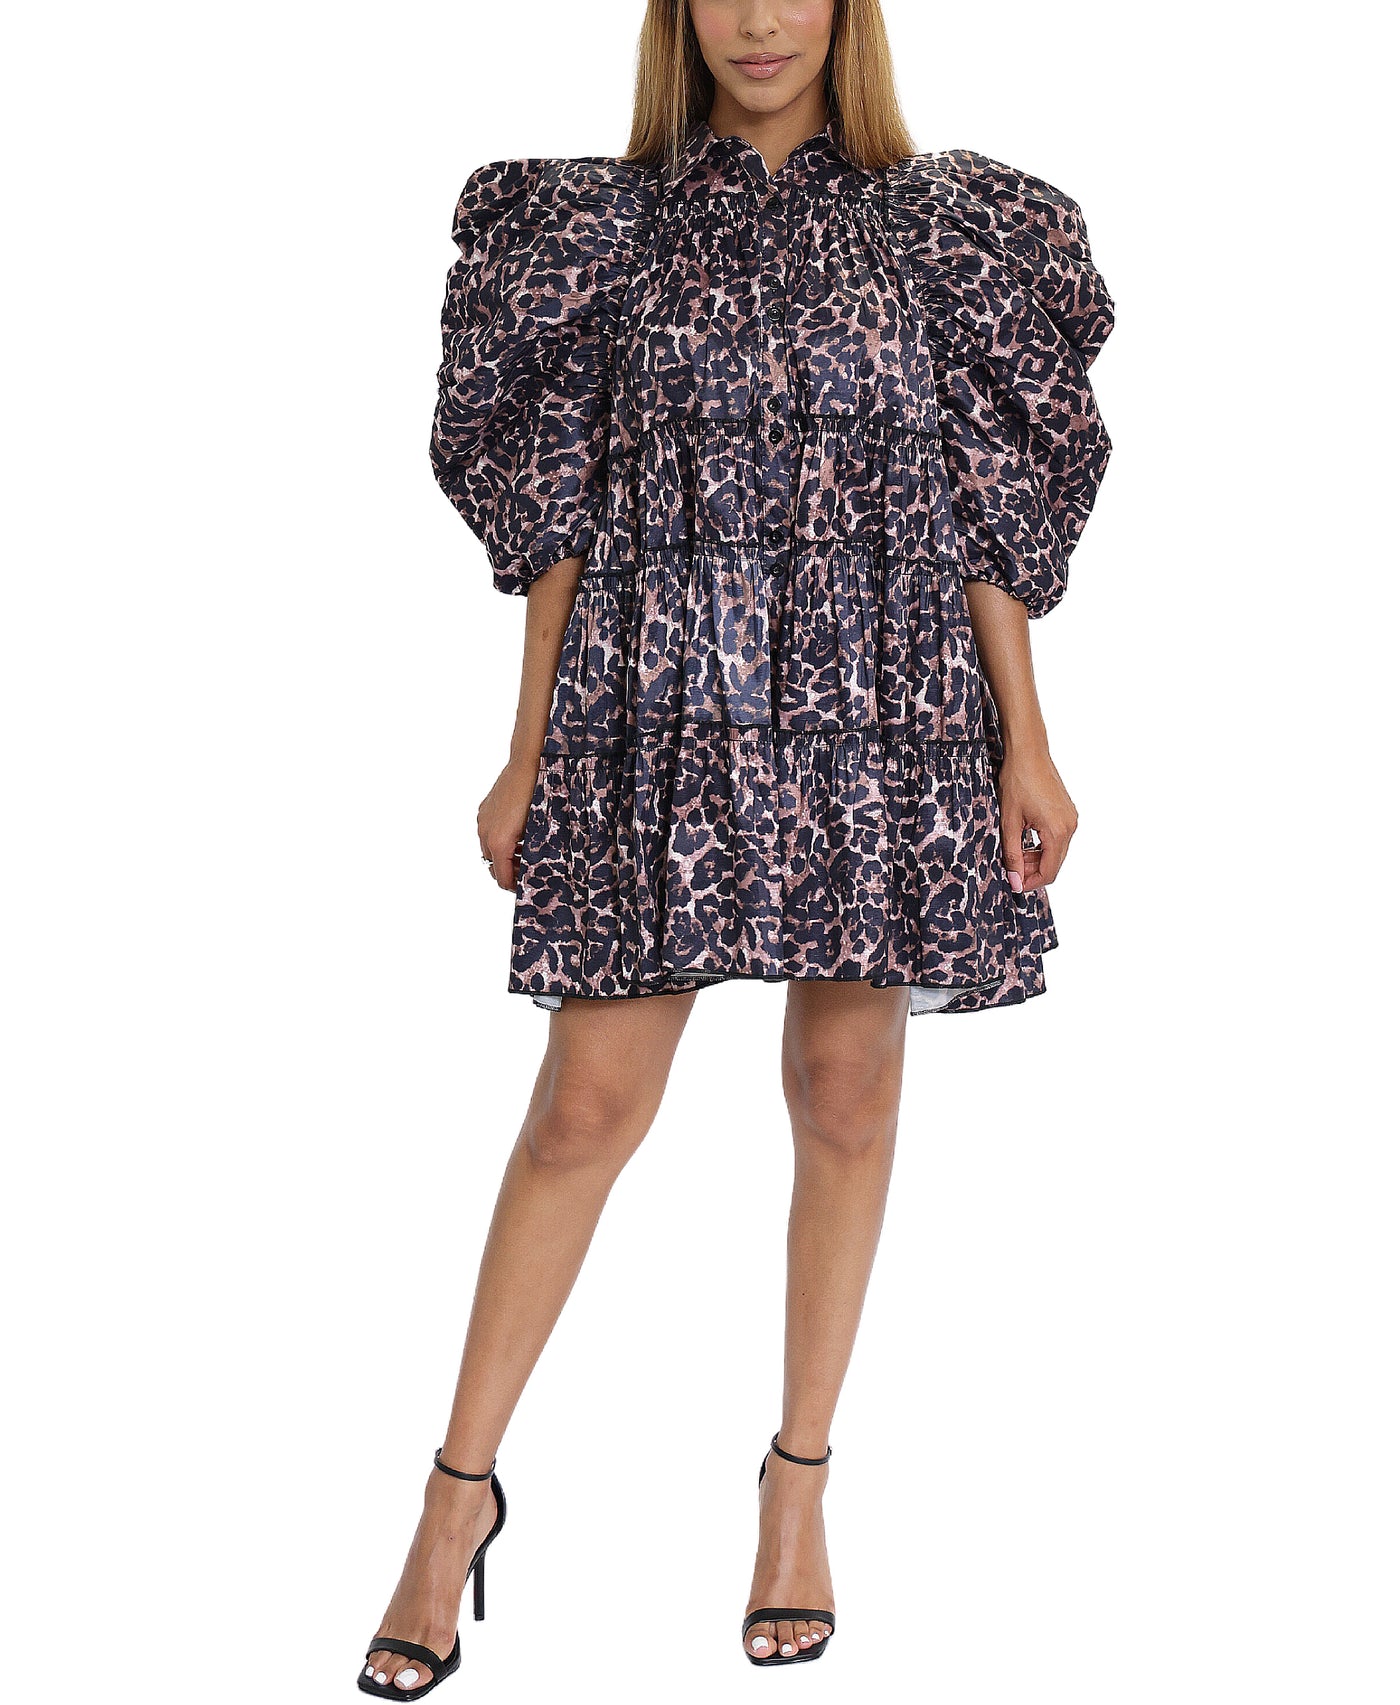 Leopard Print Dress image 1